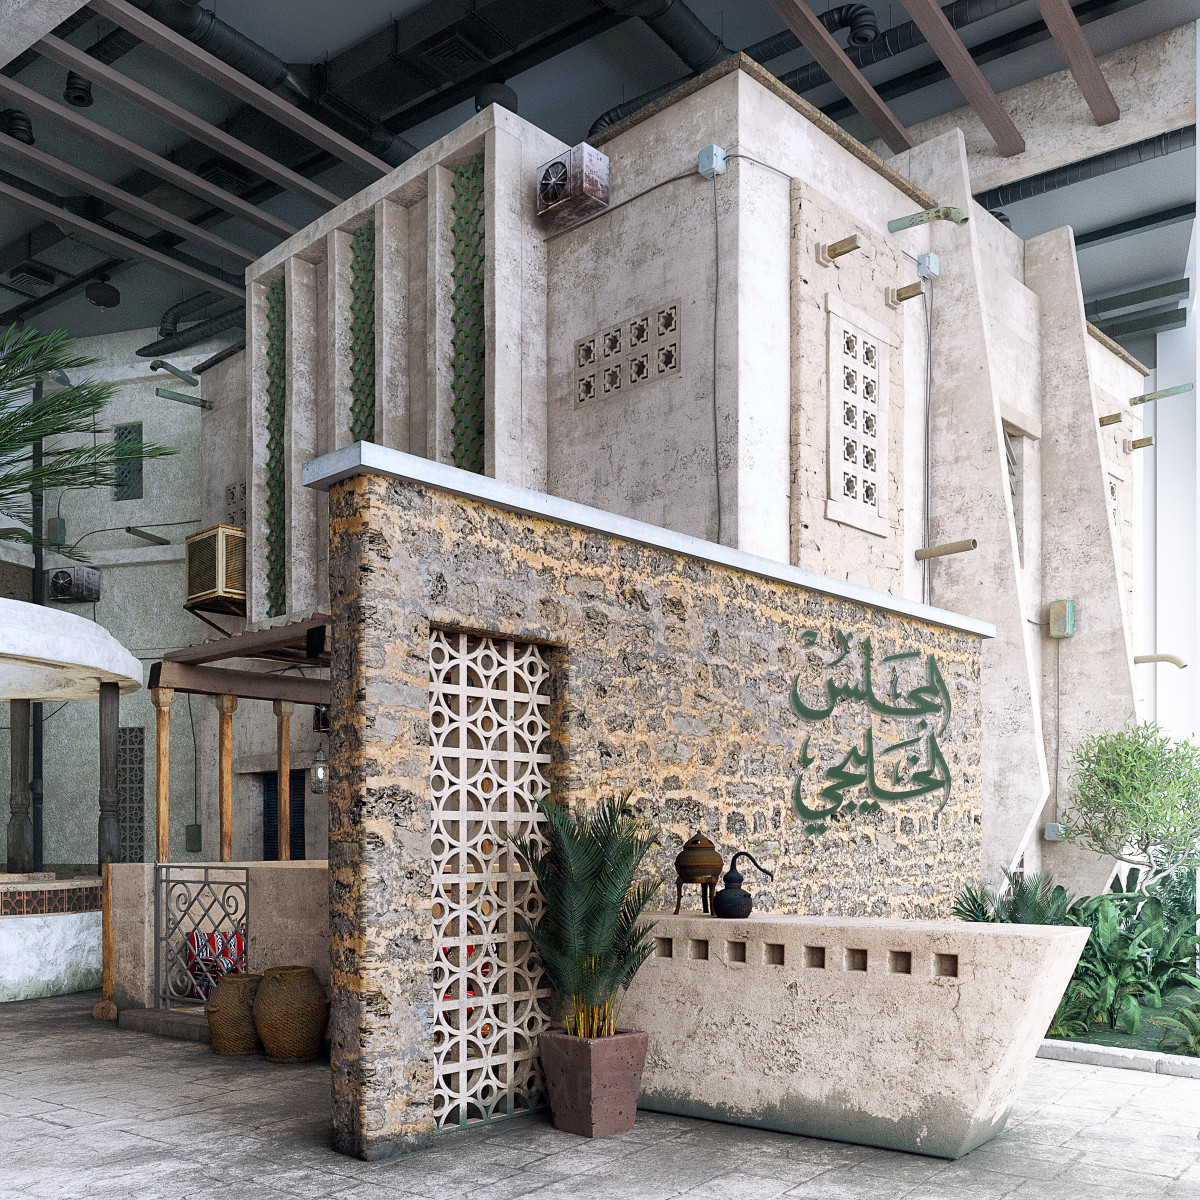 Al Majlis Traditional Restaurant by Ahmed Habib